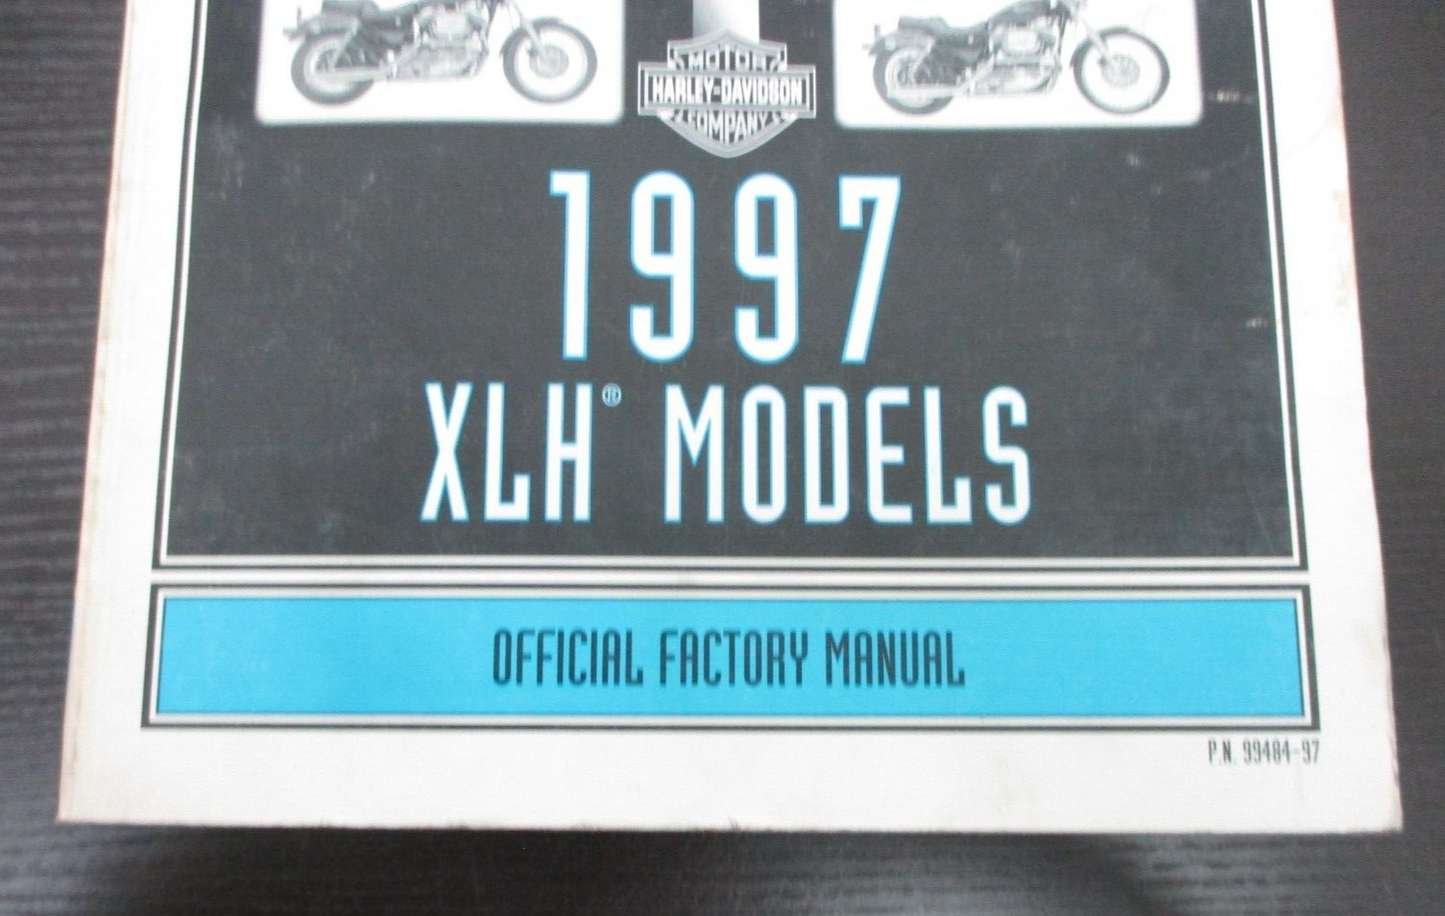 Harley-Davidson 1997 XLH Models Official Factory Service Manual 99484-97